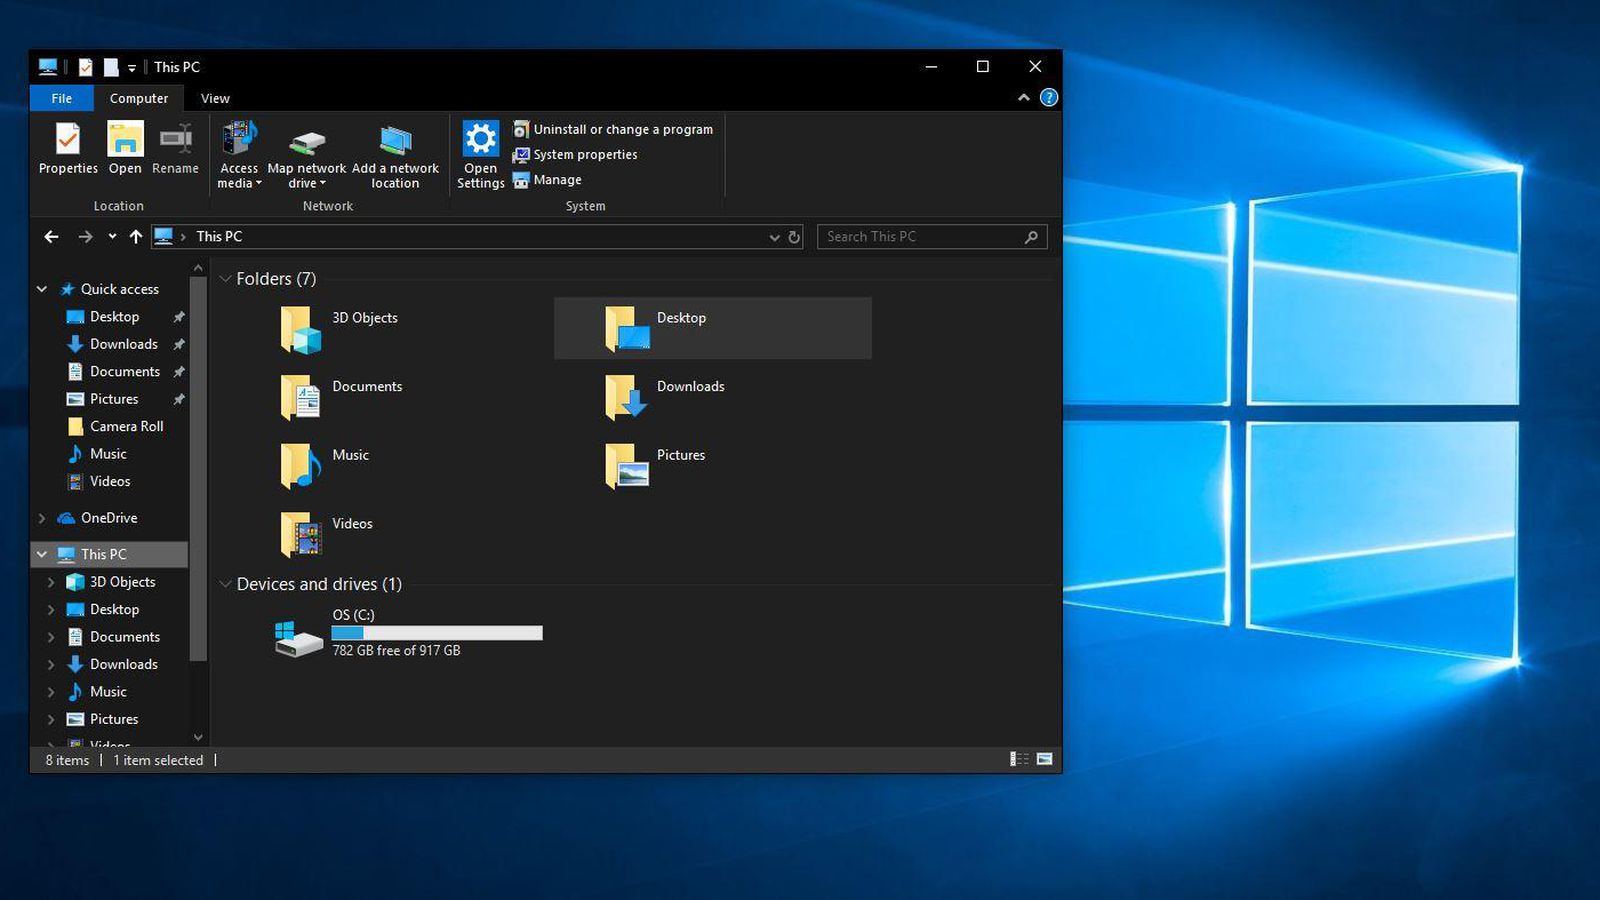 Cara Install Ulang Windows 10 Tanpa Menghapus Data + Gambar Pendukung